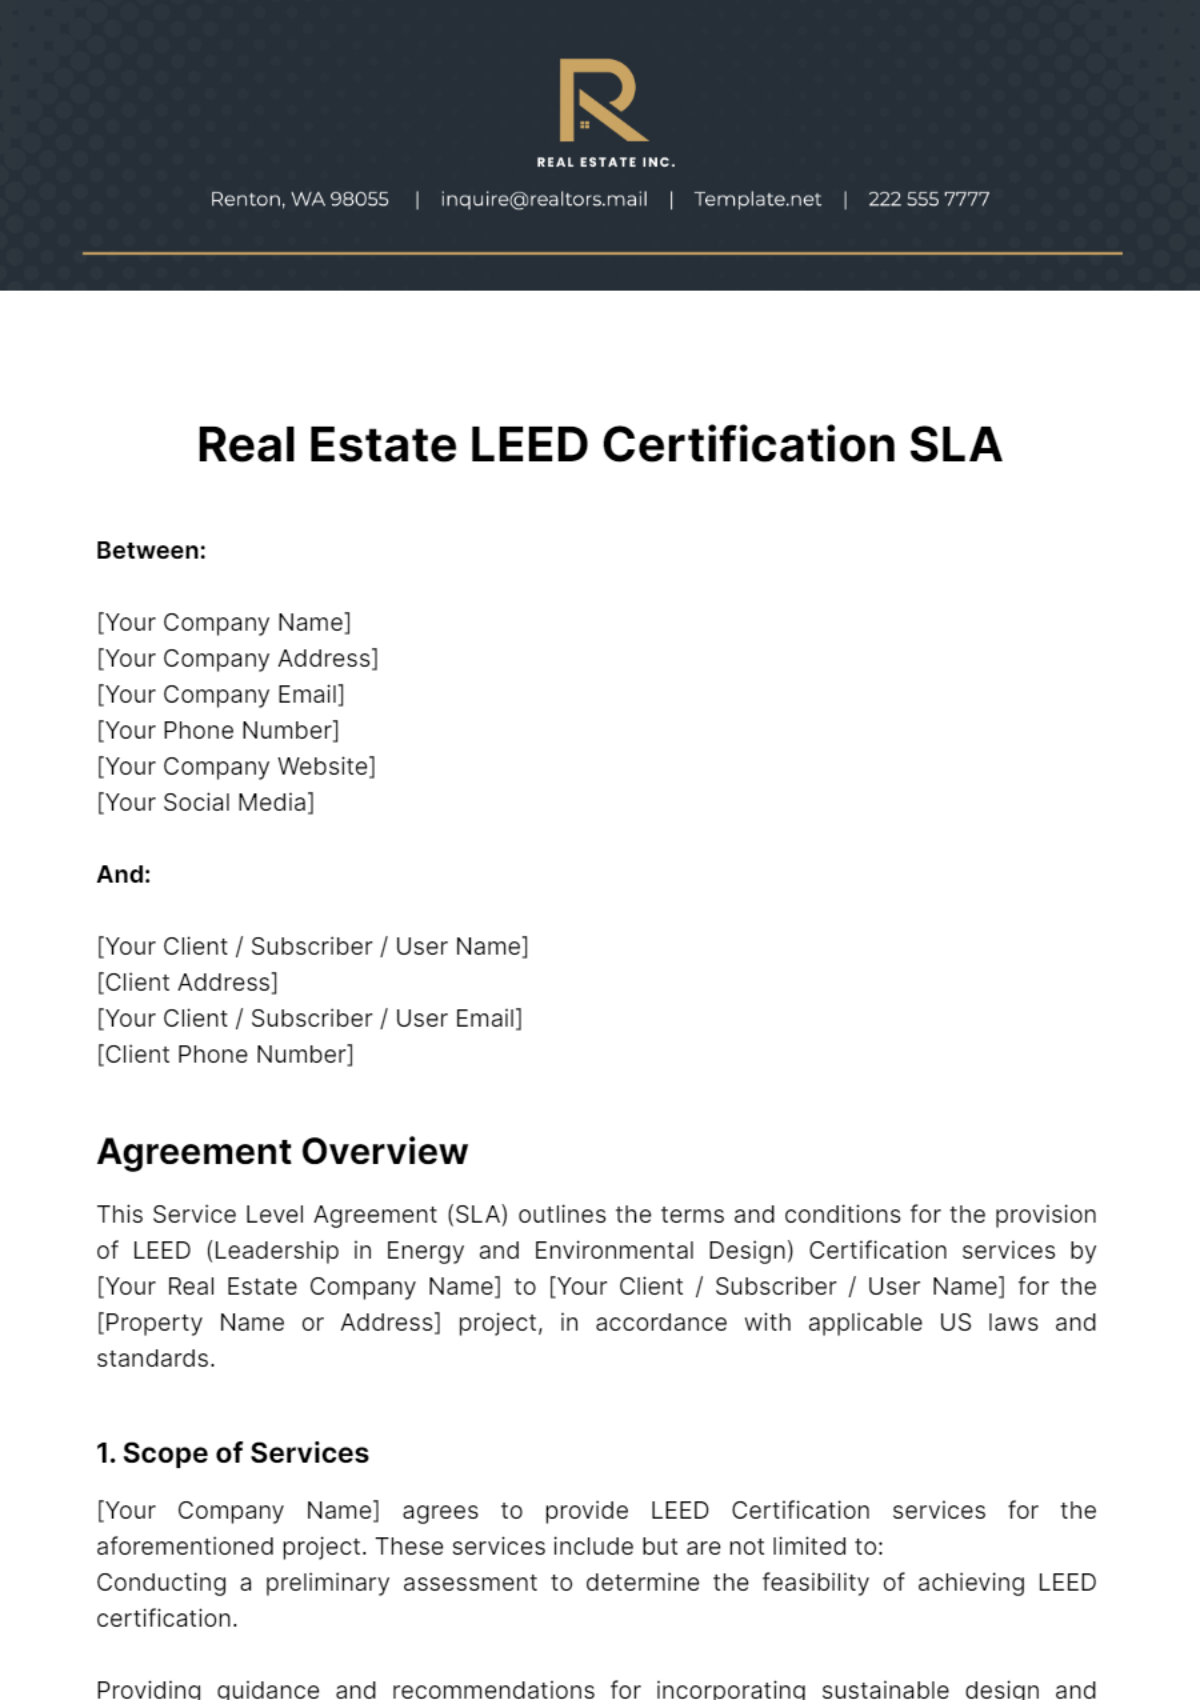 Real Estate LEED Certification SLA Template